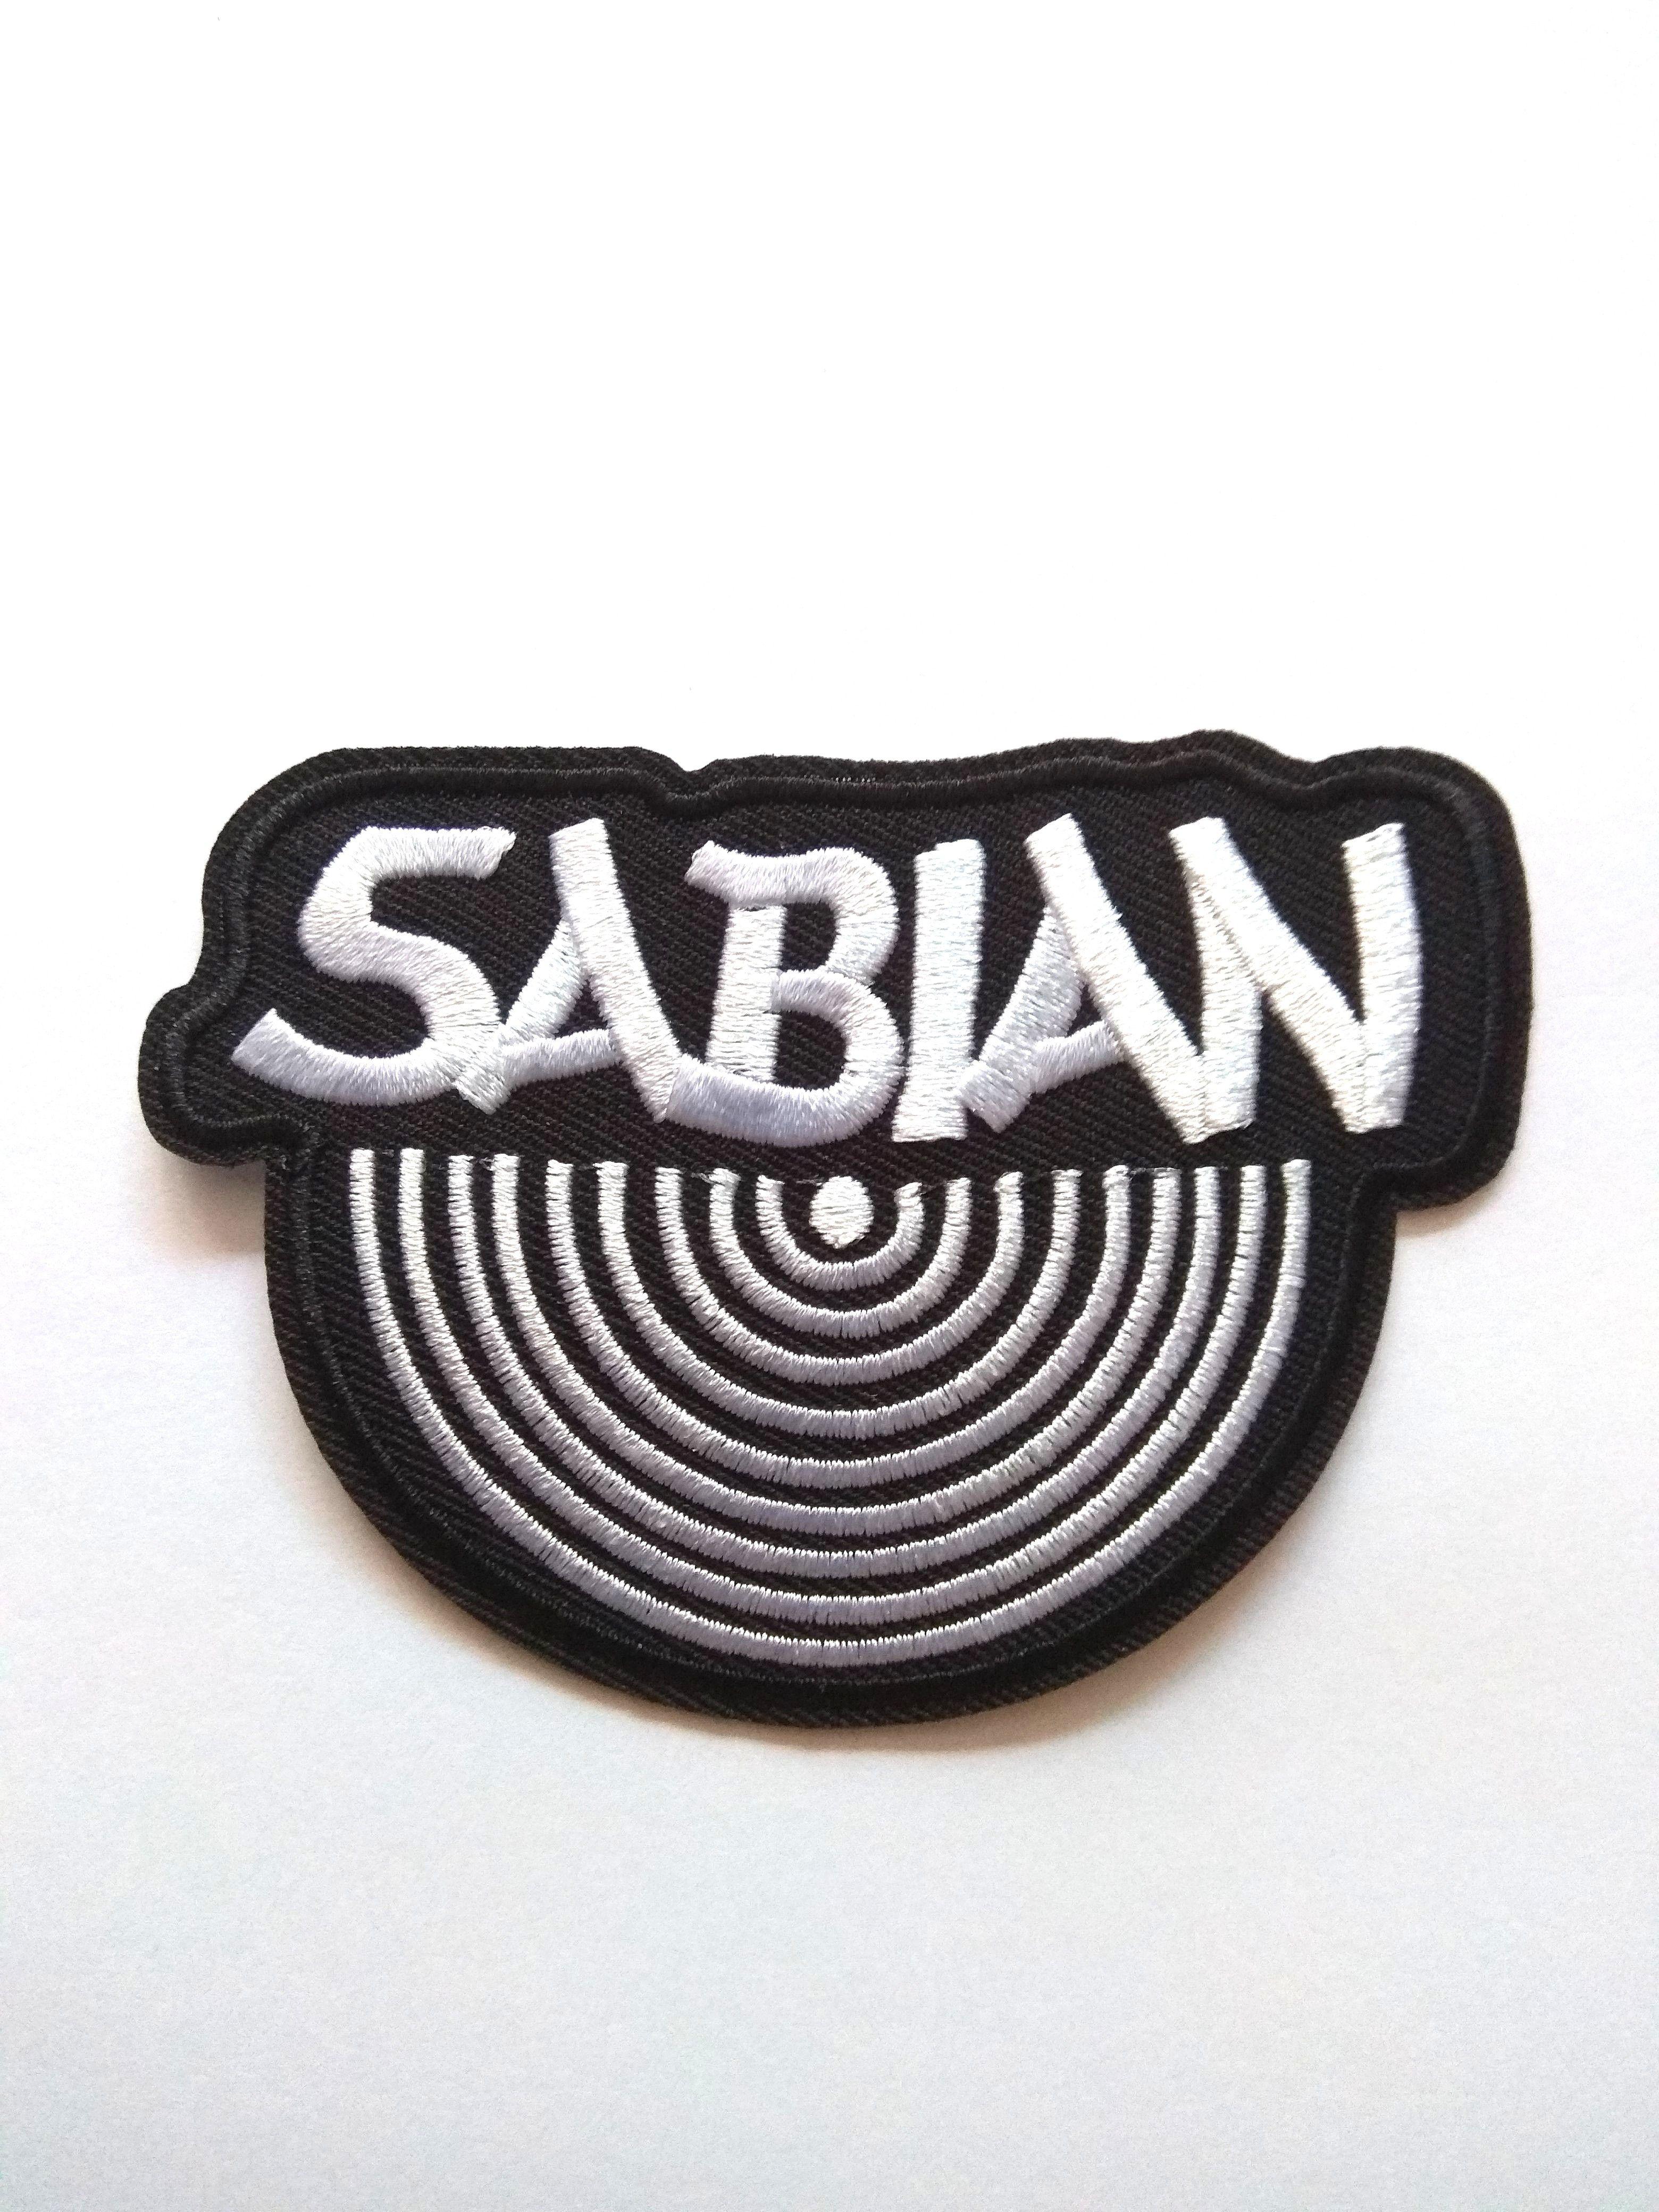 Sabian Logo - Sabian Logo Cymbals Music Iron On Patch